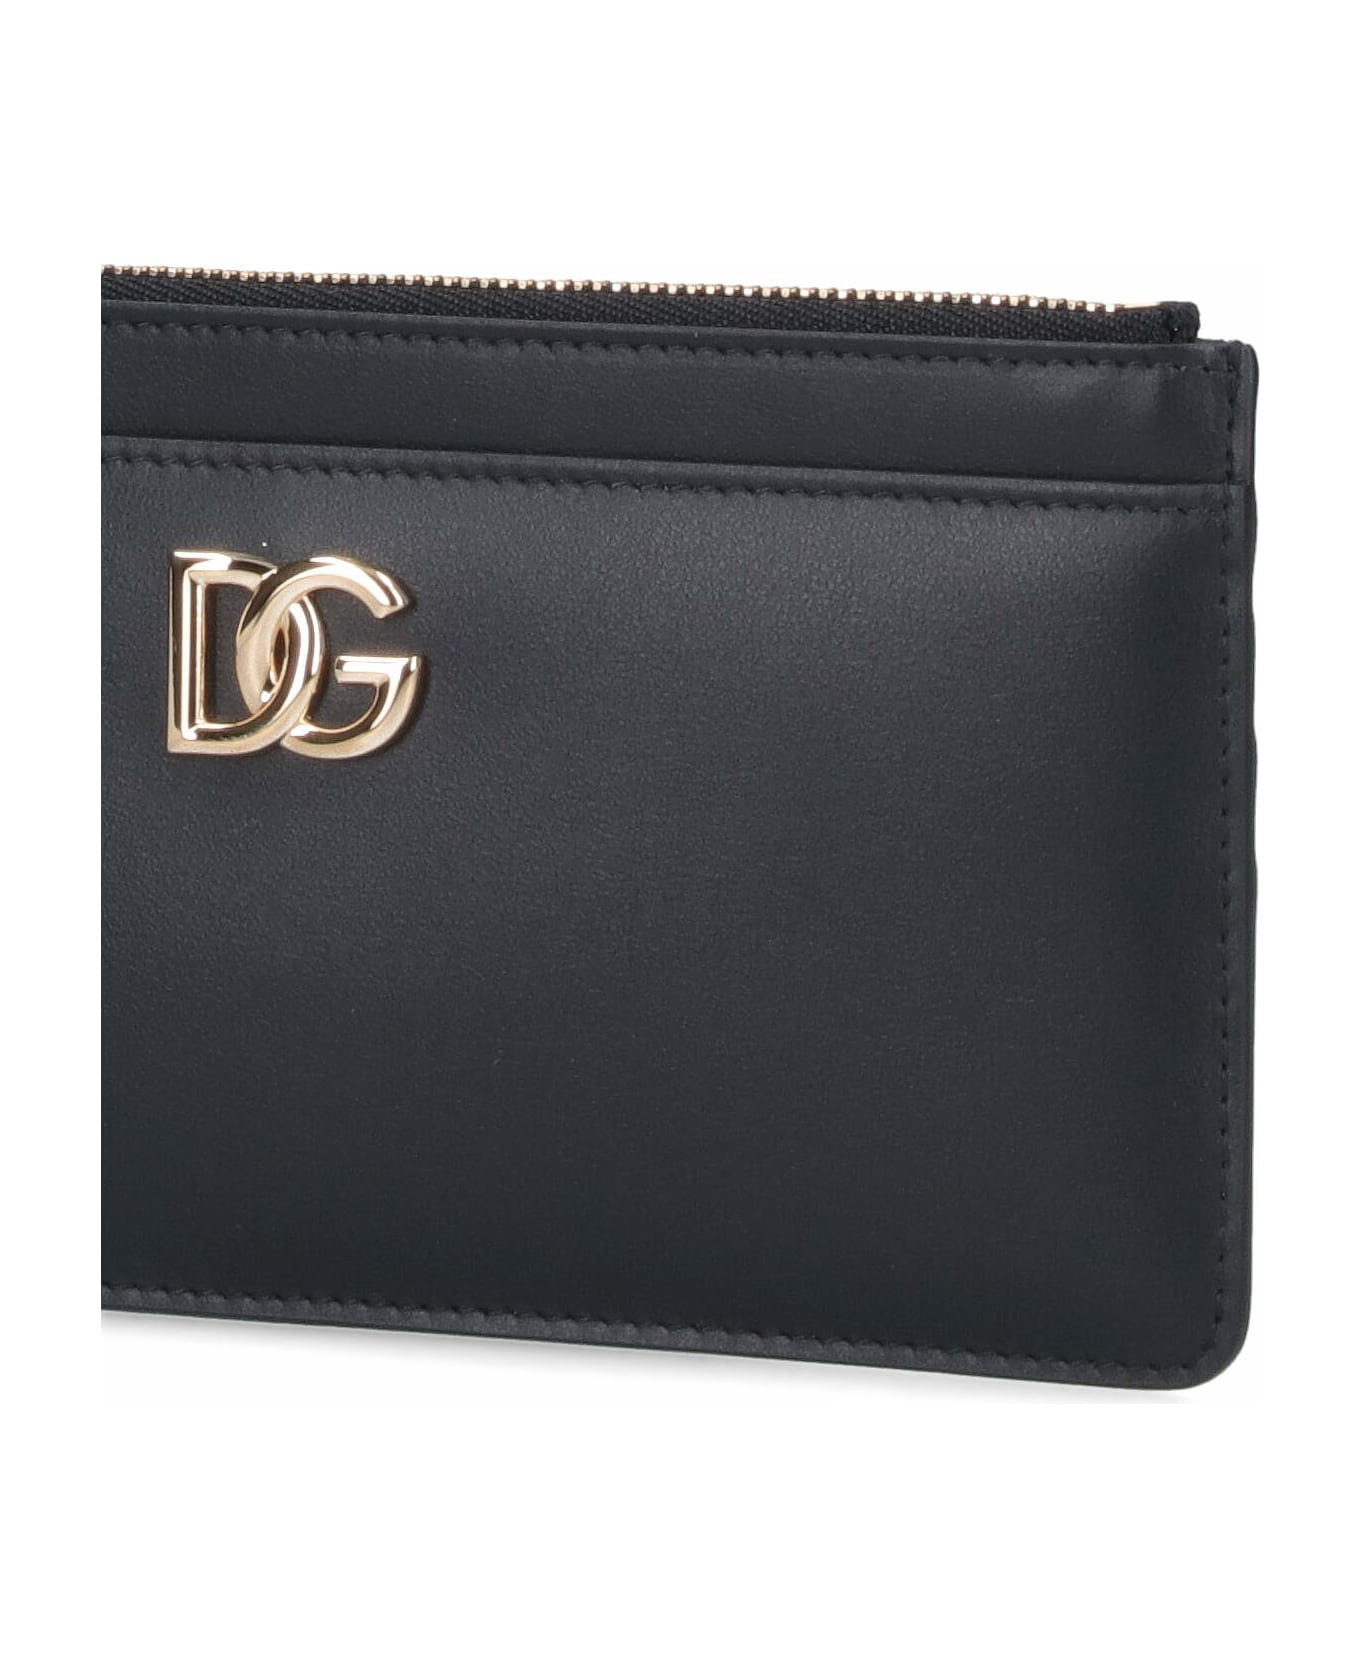 Dolce & Gabbana Logo Leather Cardholder - Black